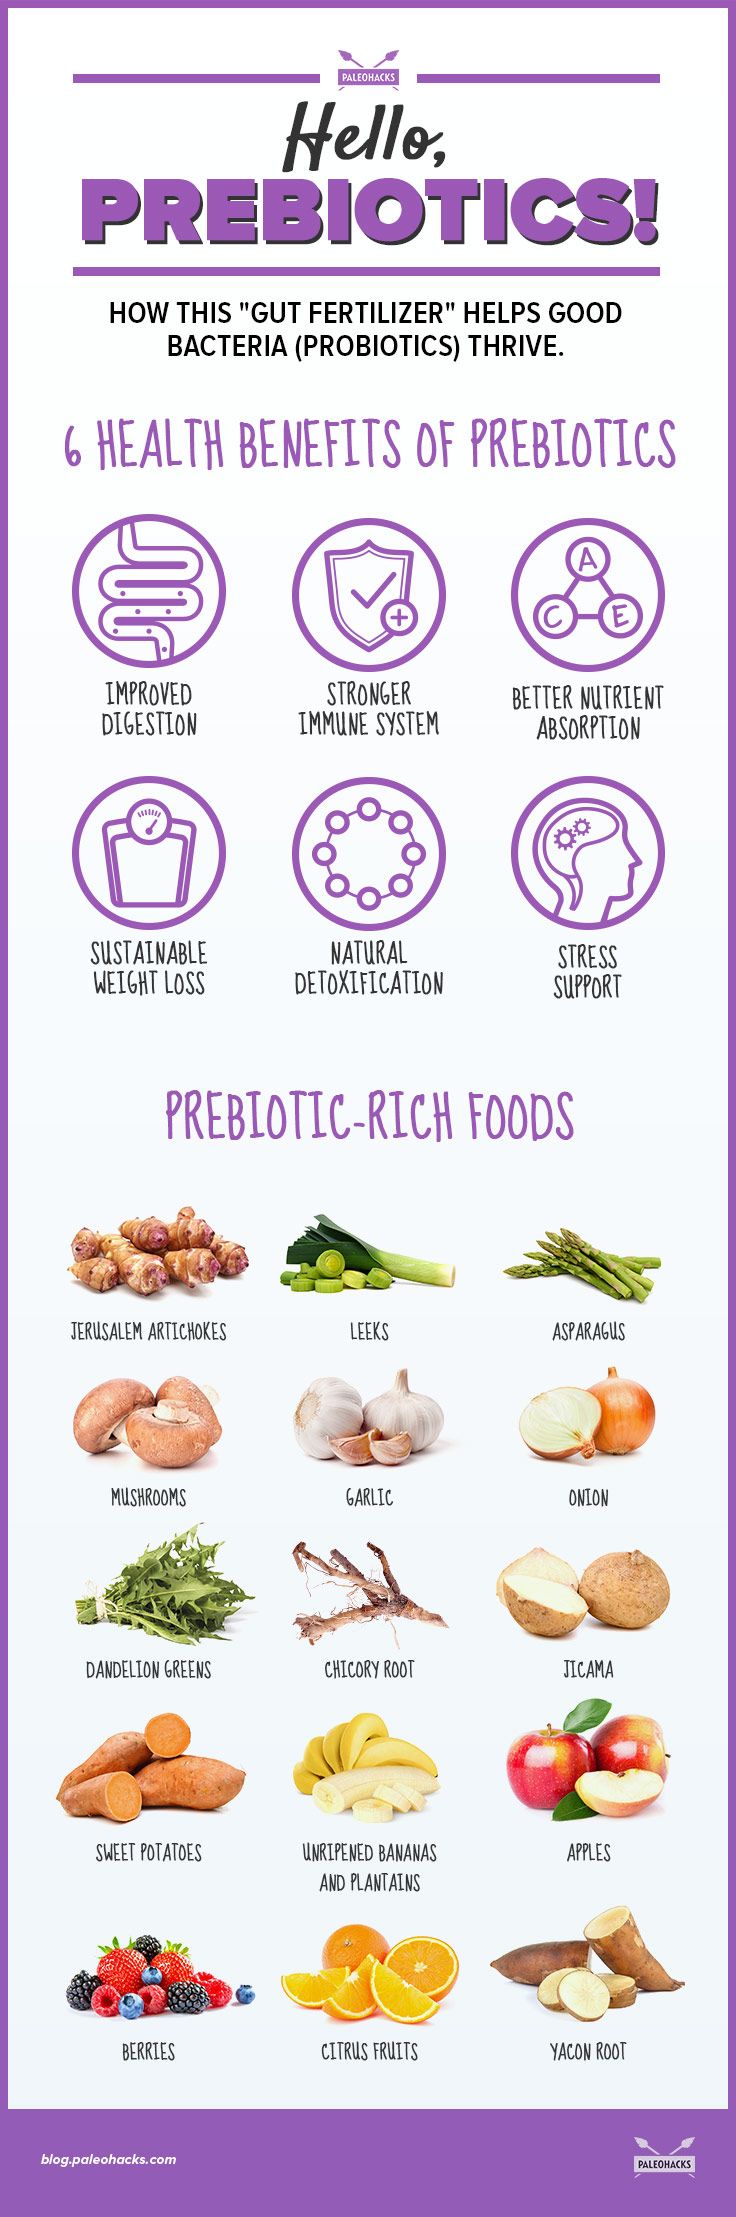 prebiotics infographic